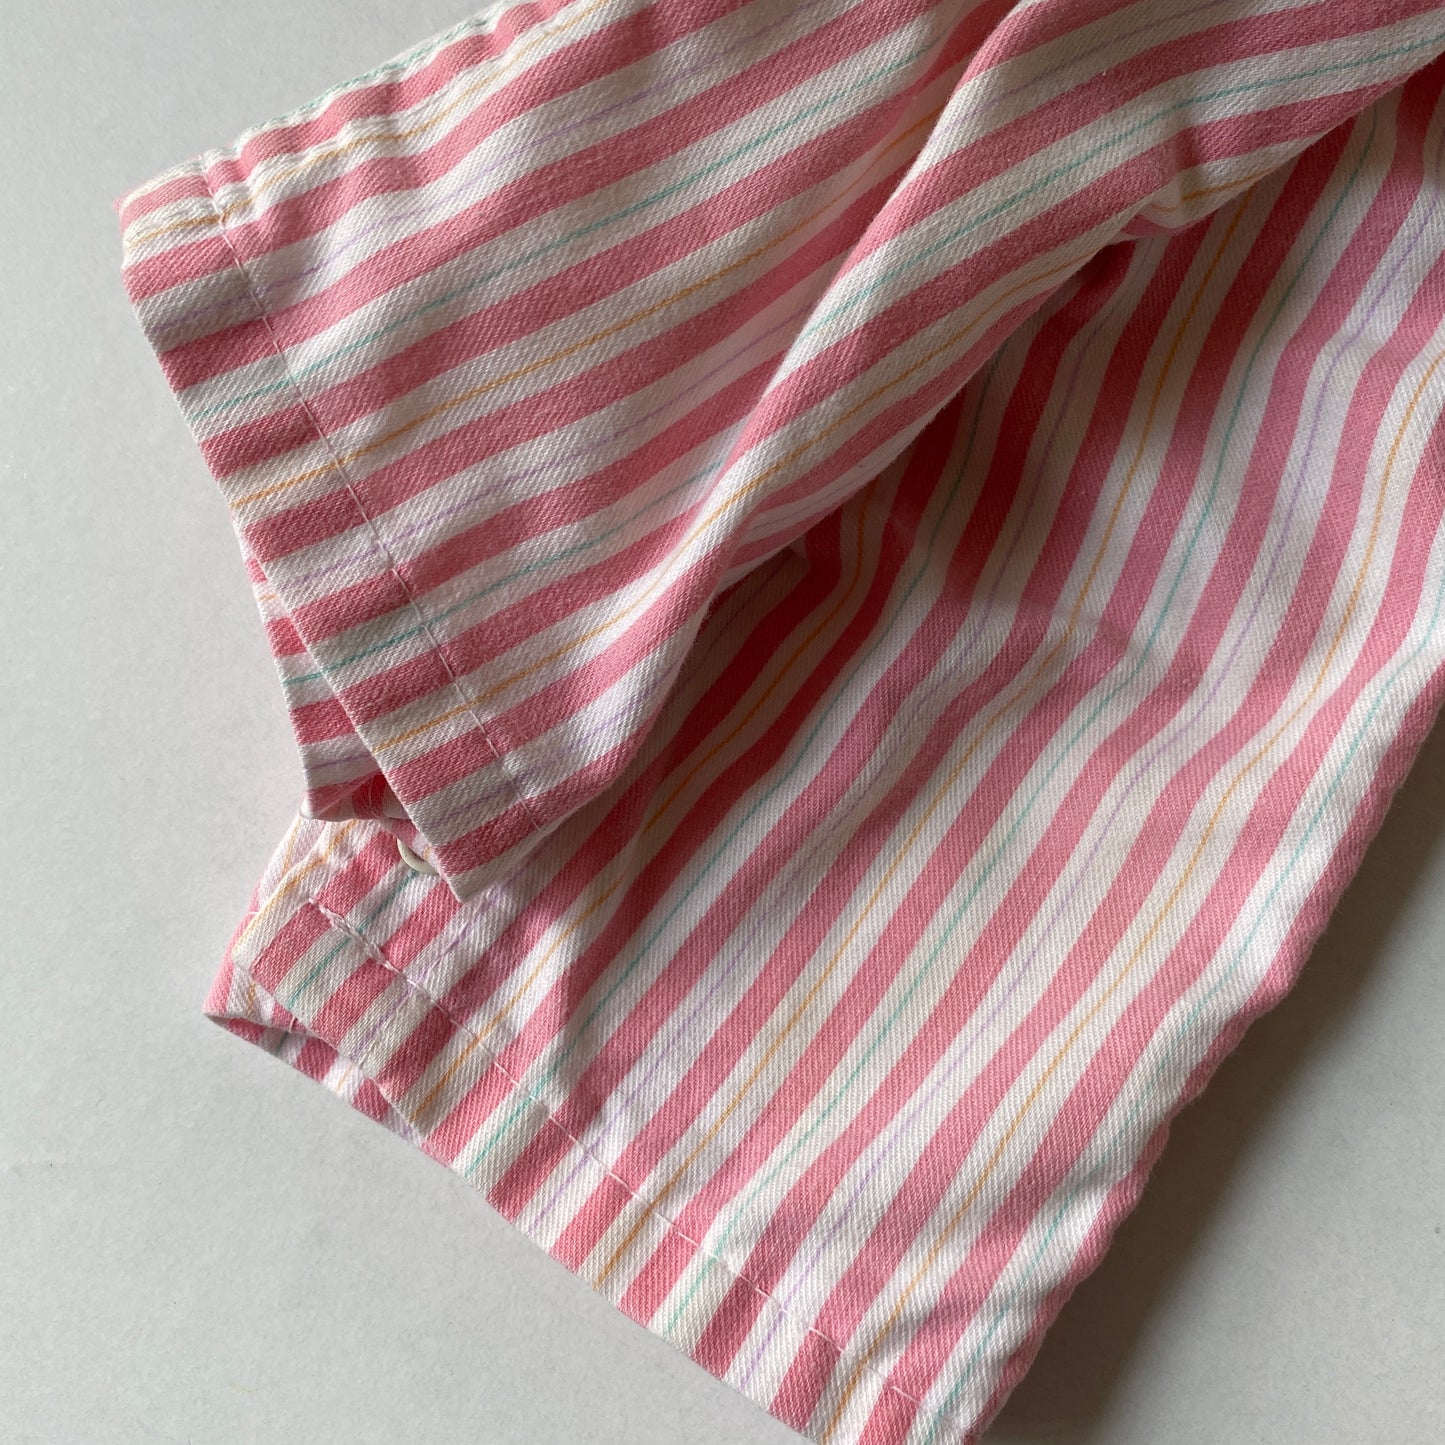 Vintage OshKosh Pastel Pink Stripe Overalls (3/6M)